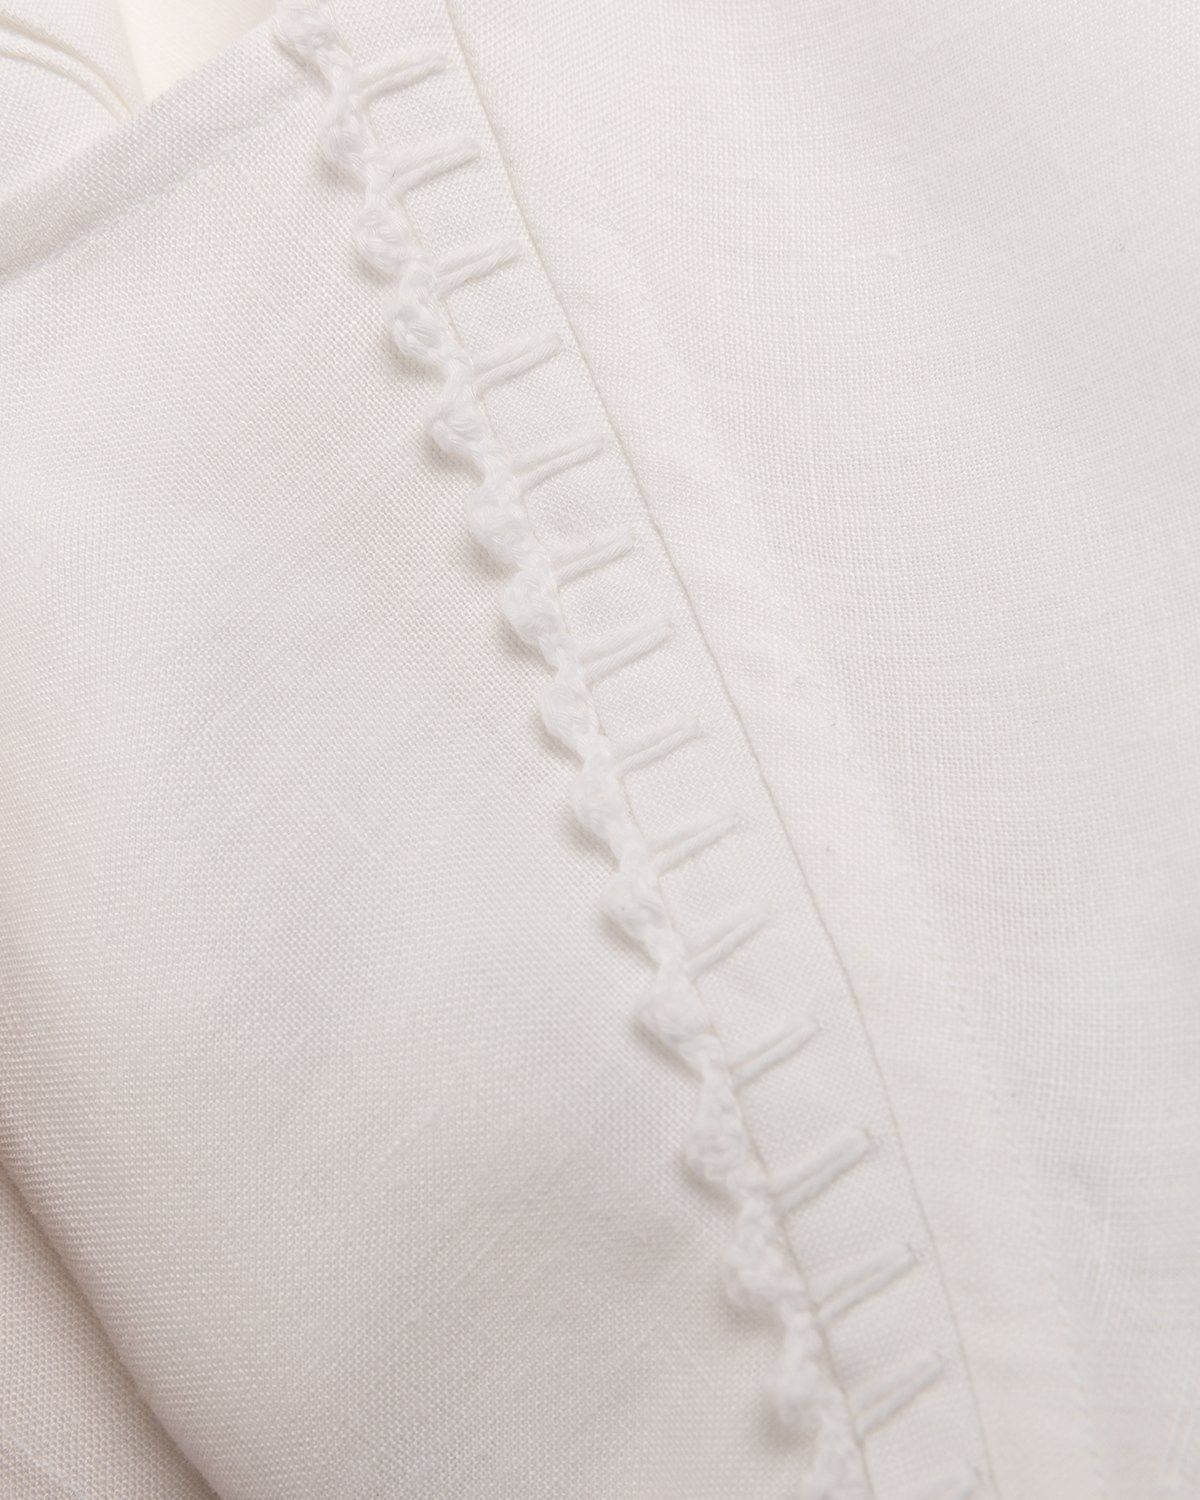 Loewe – Paula's Ibiza Buttoned Pullover Shirt White - Longsleeves - White - Image 6